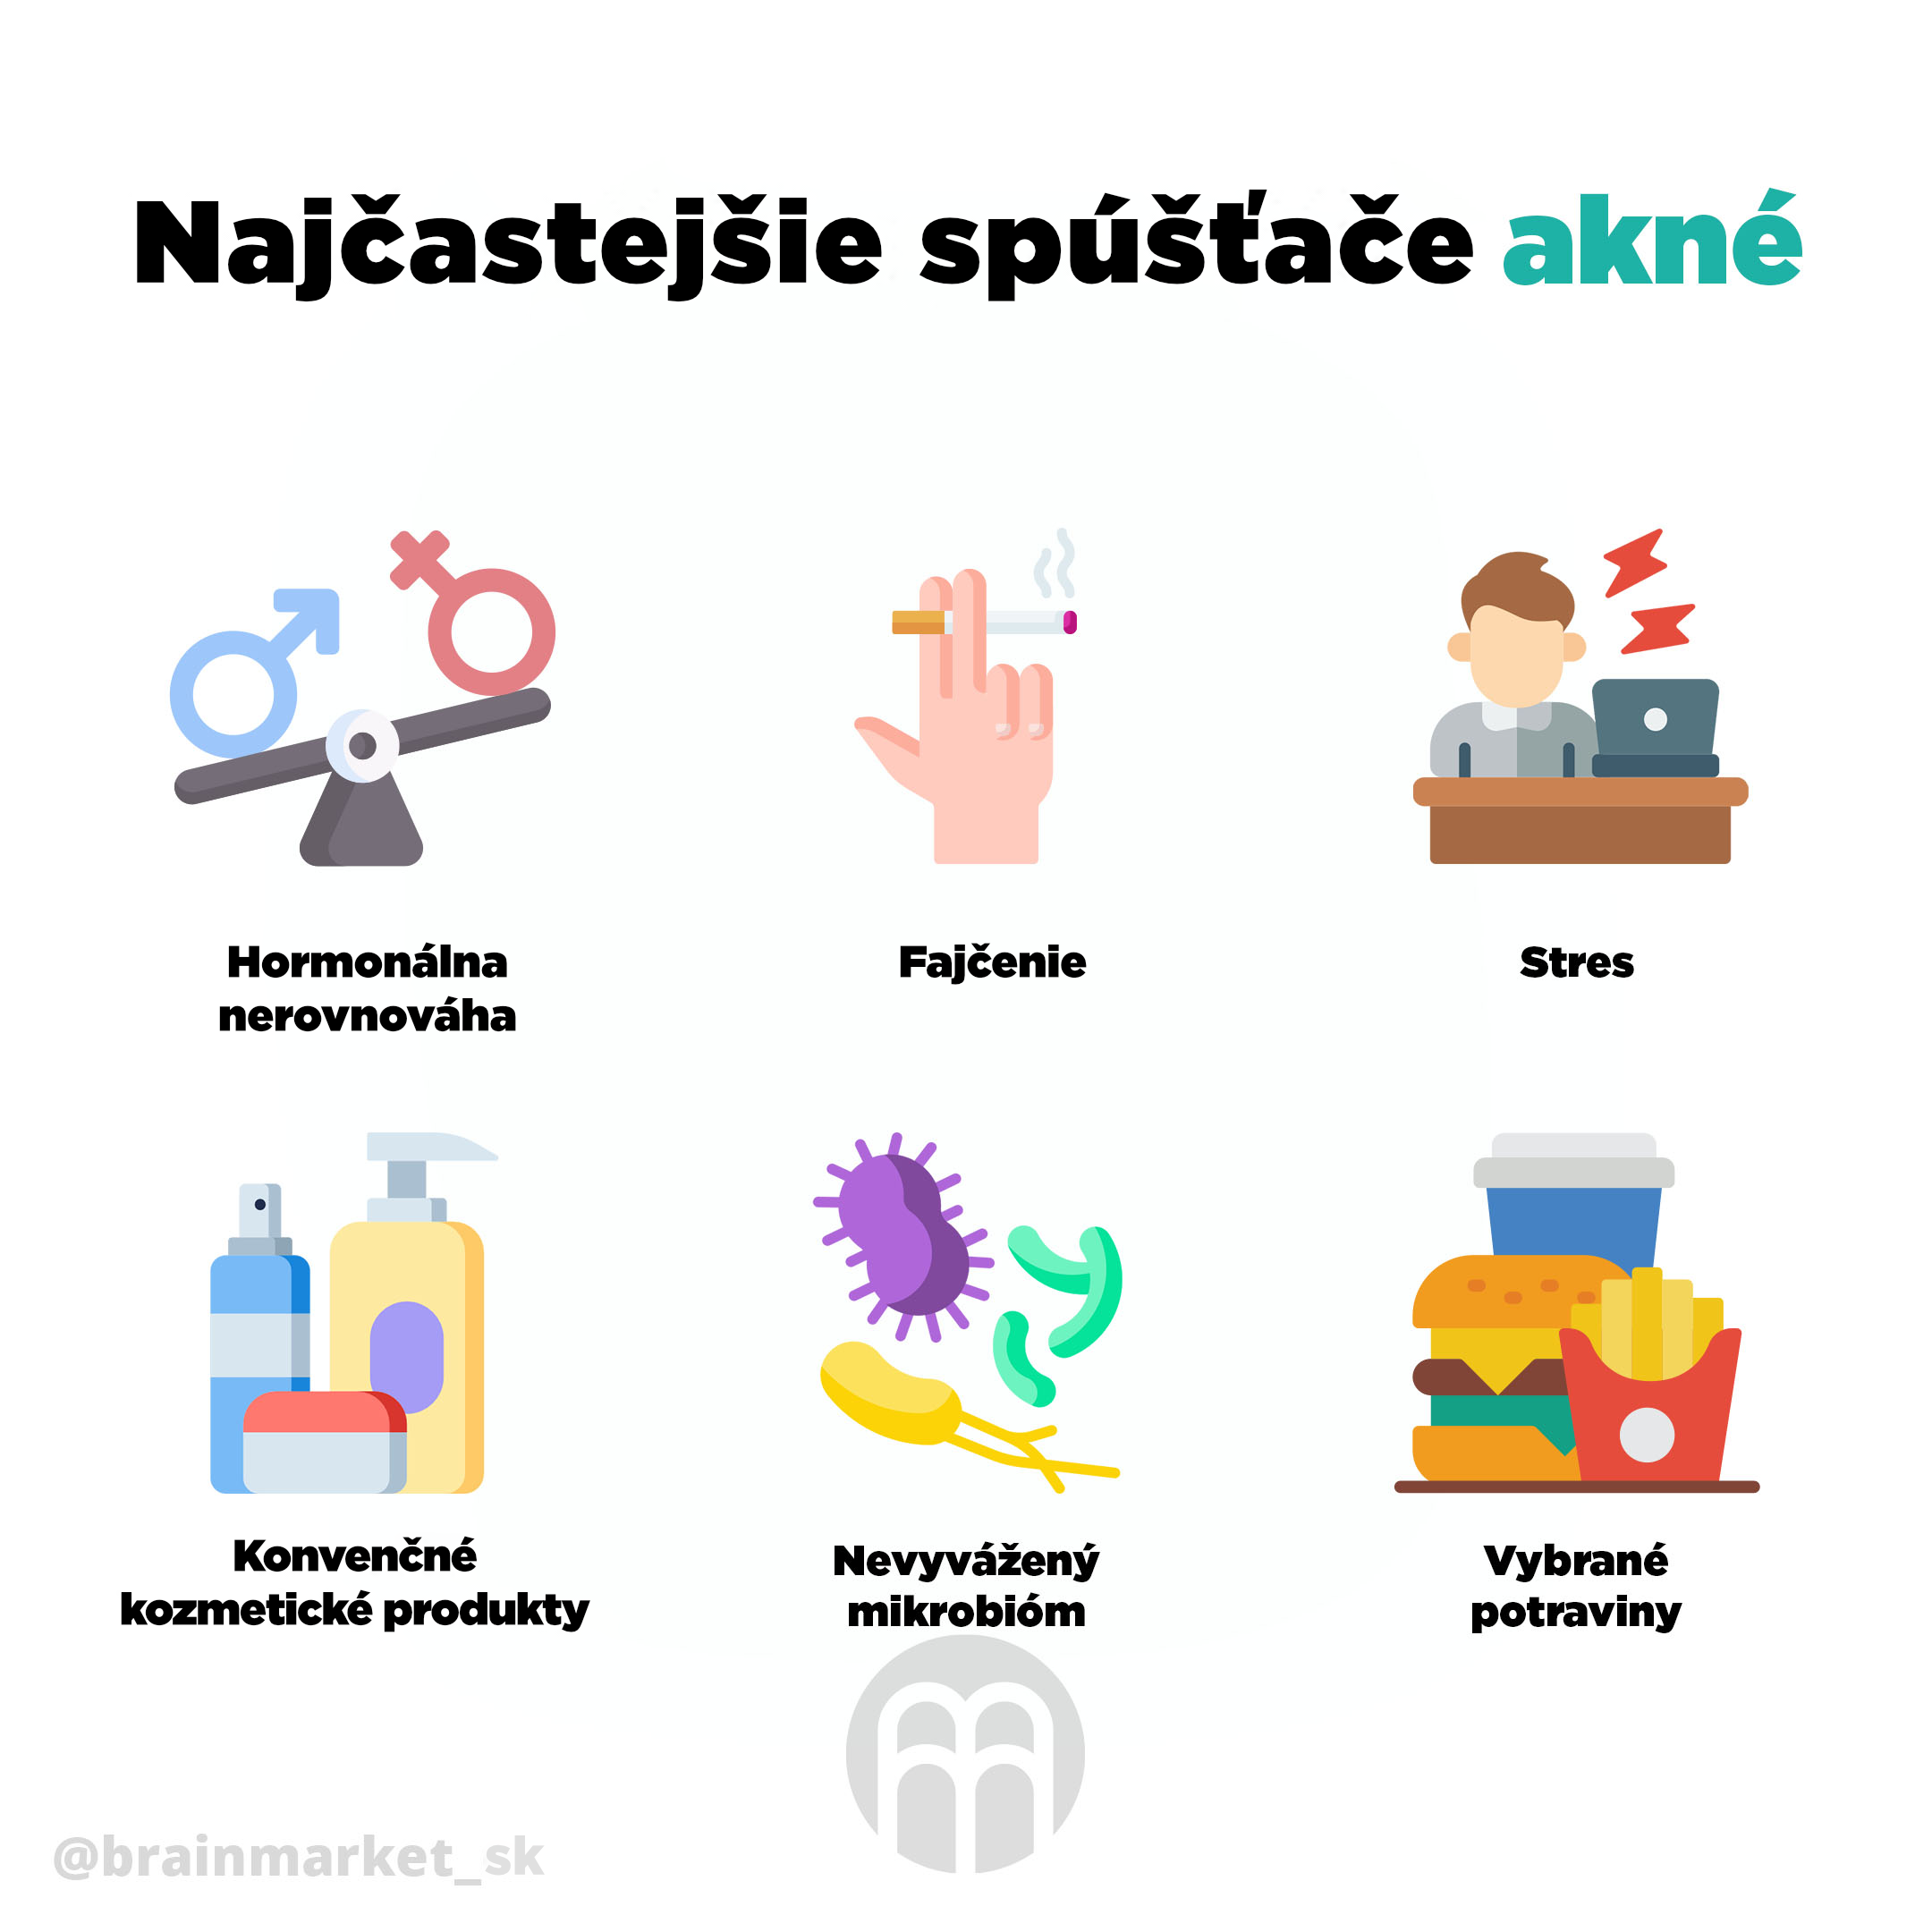 nejcastejsti_spoustece_akne_(blog)_infografika_brainmarket_cz